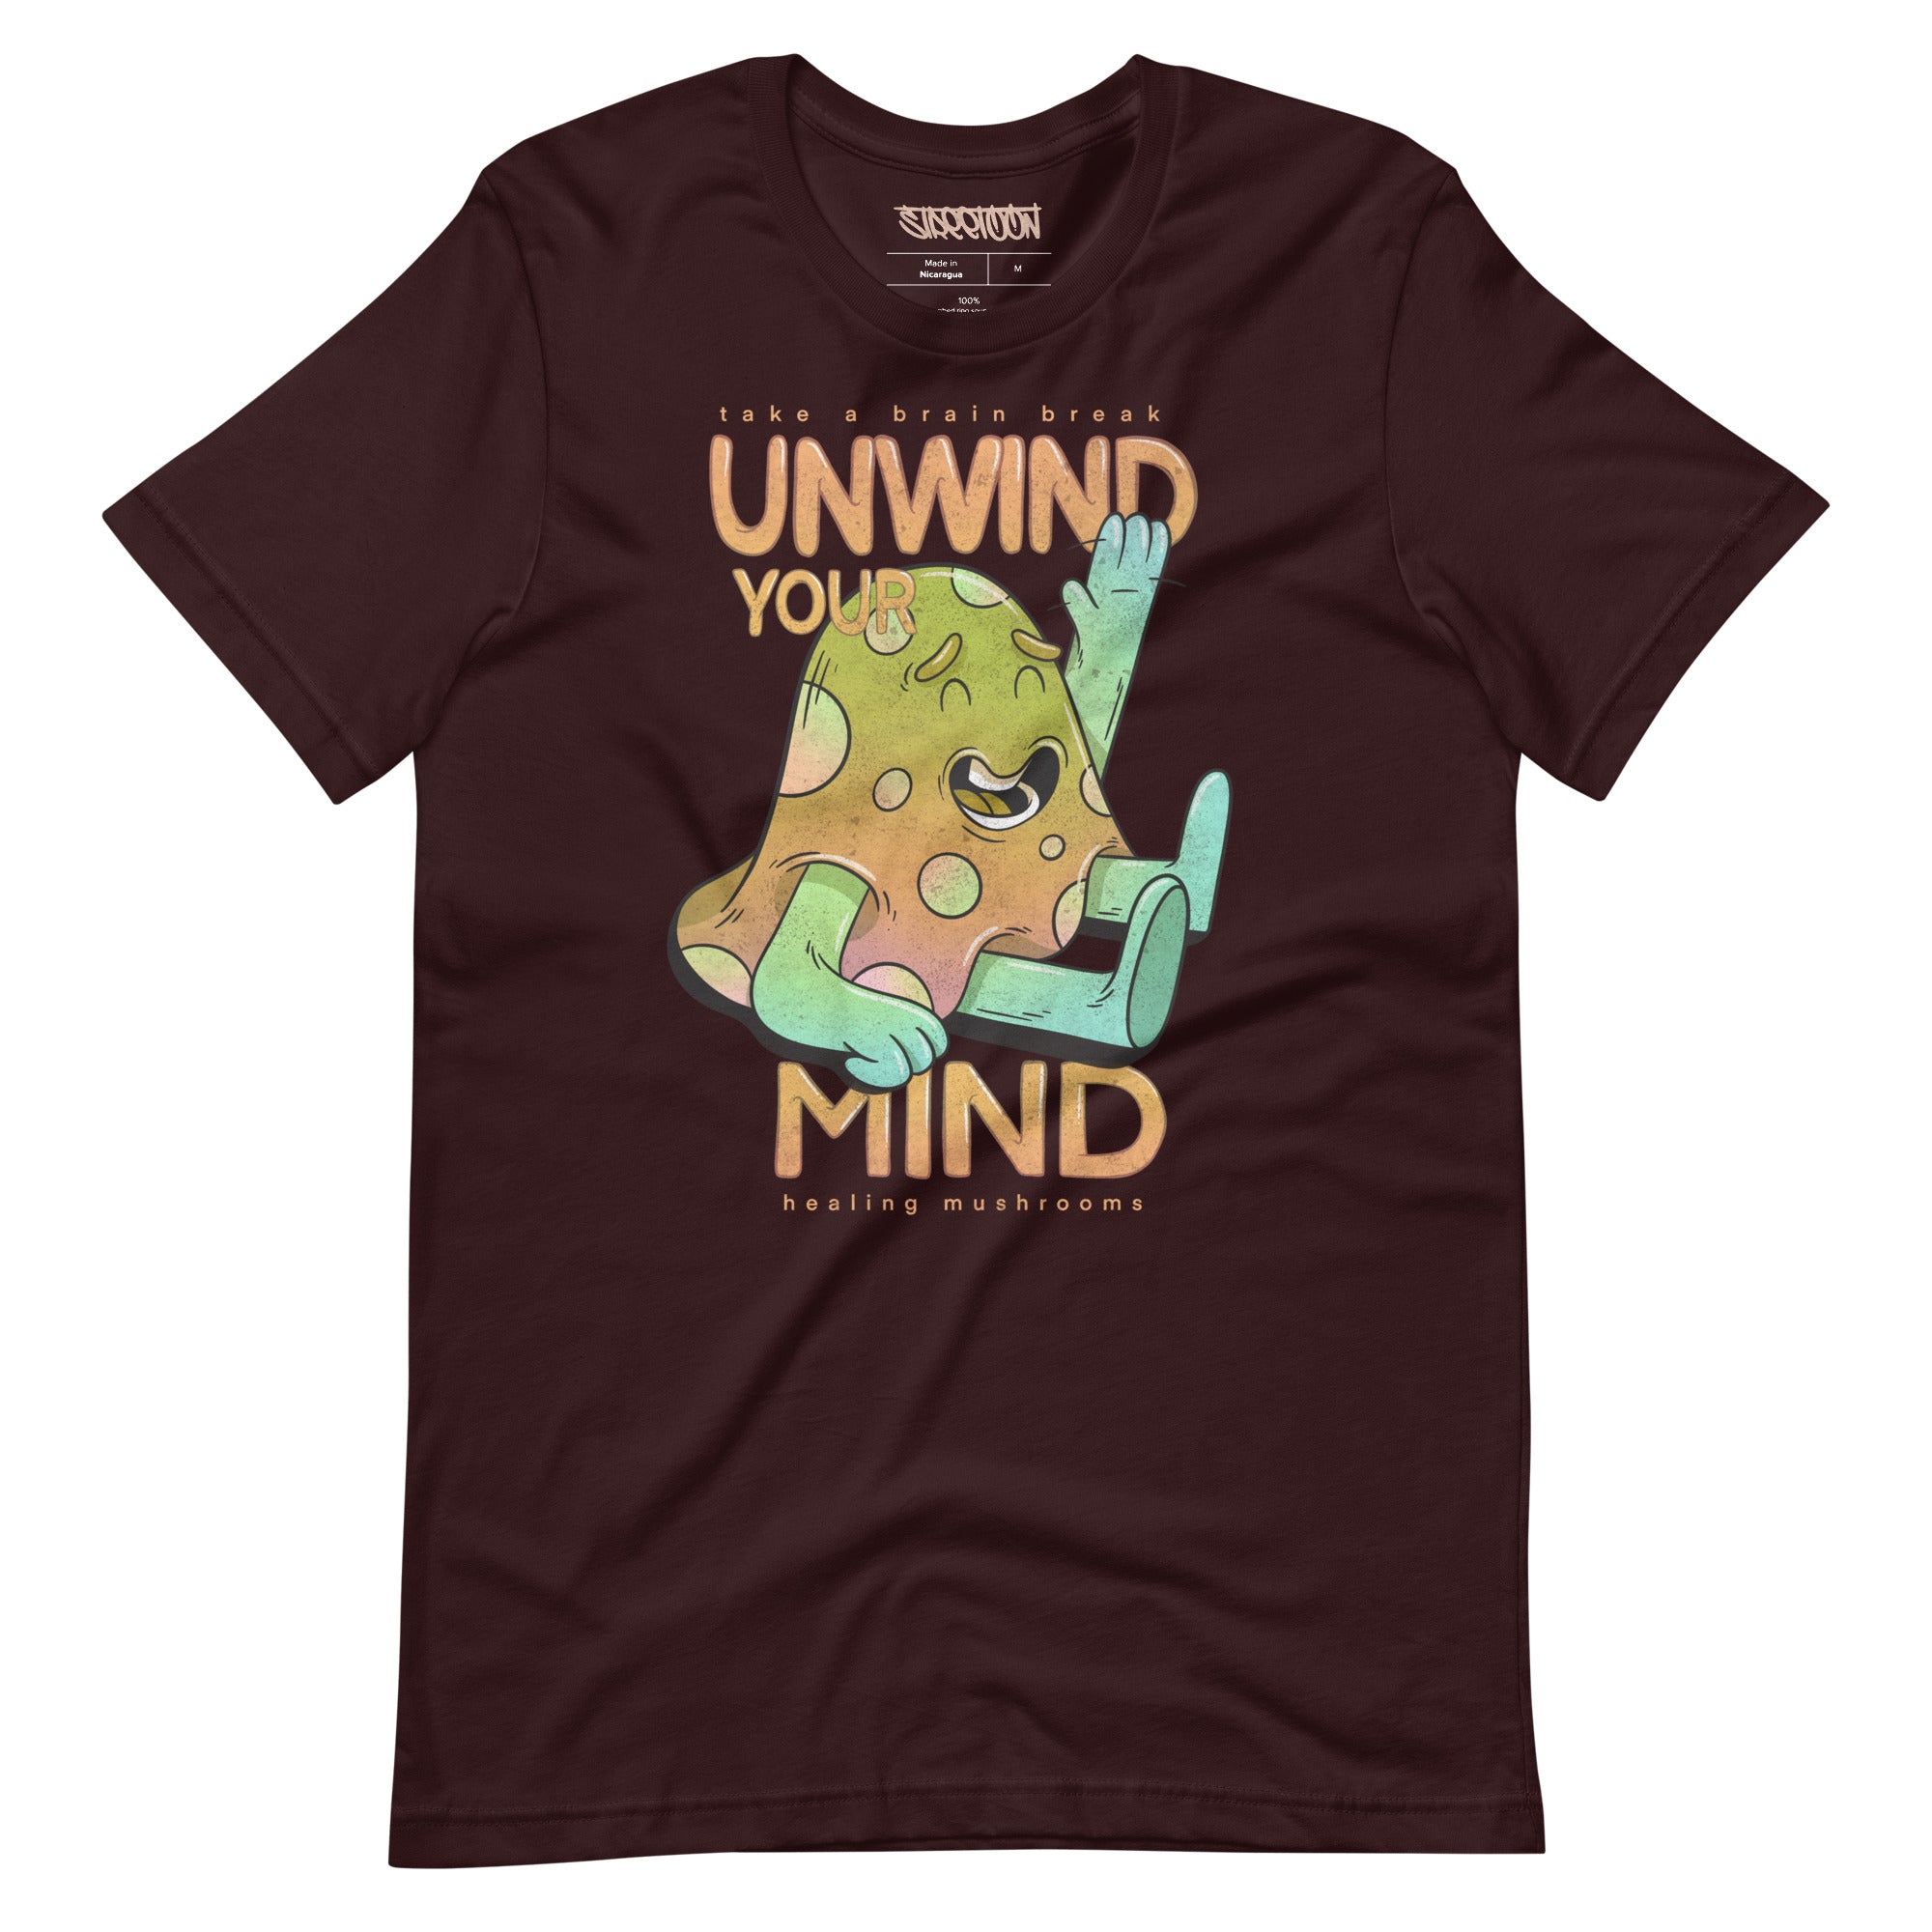 UNWIND YOUR MIND T-SHIRT